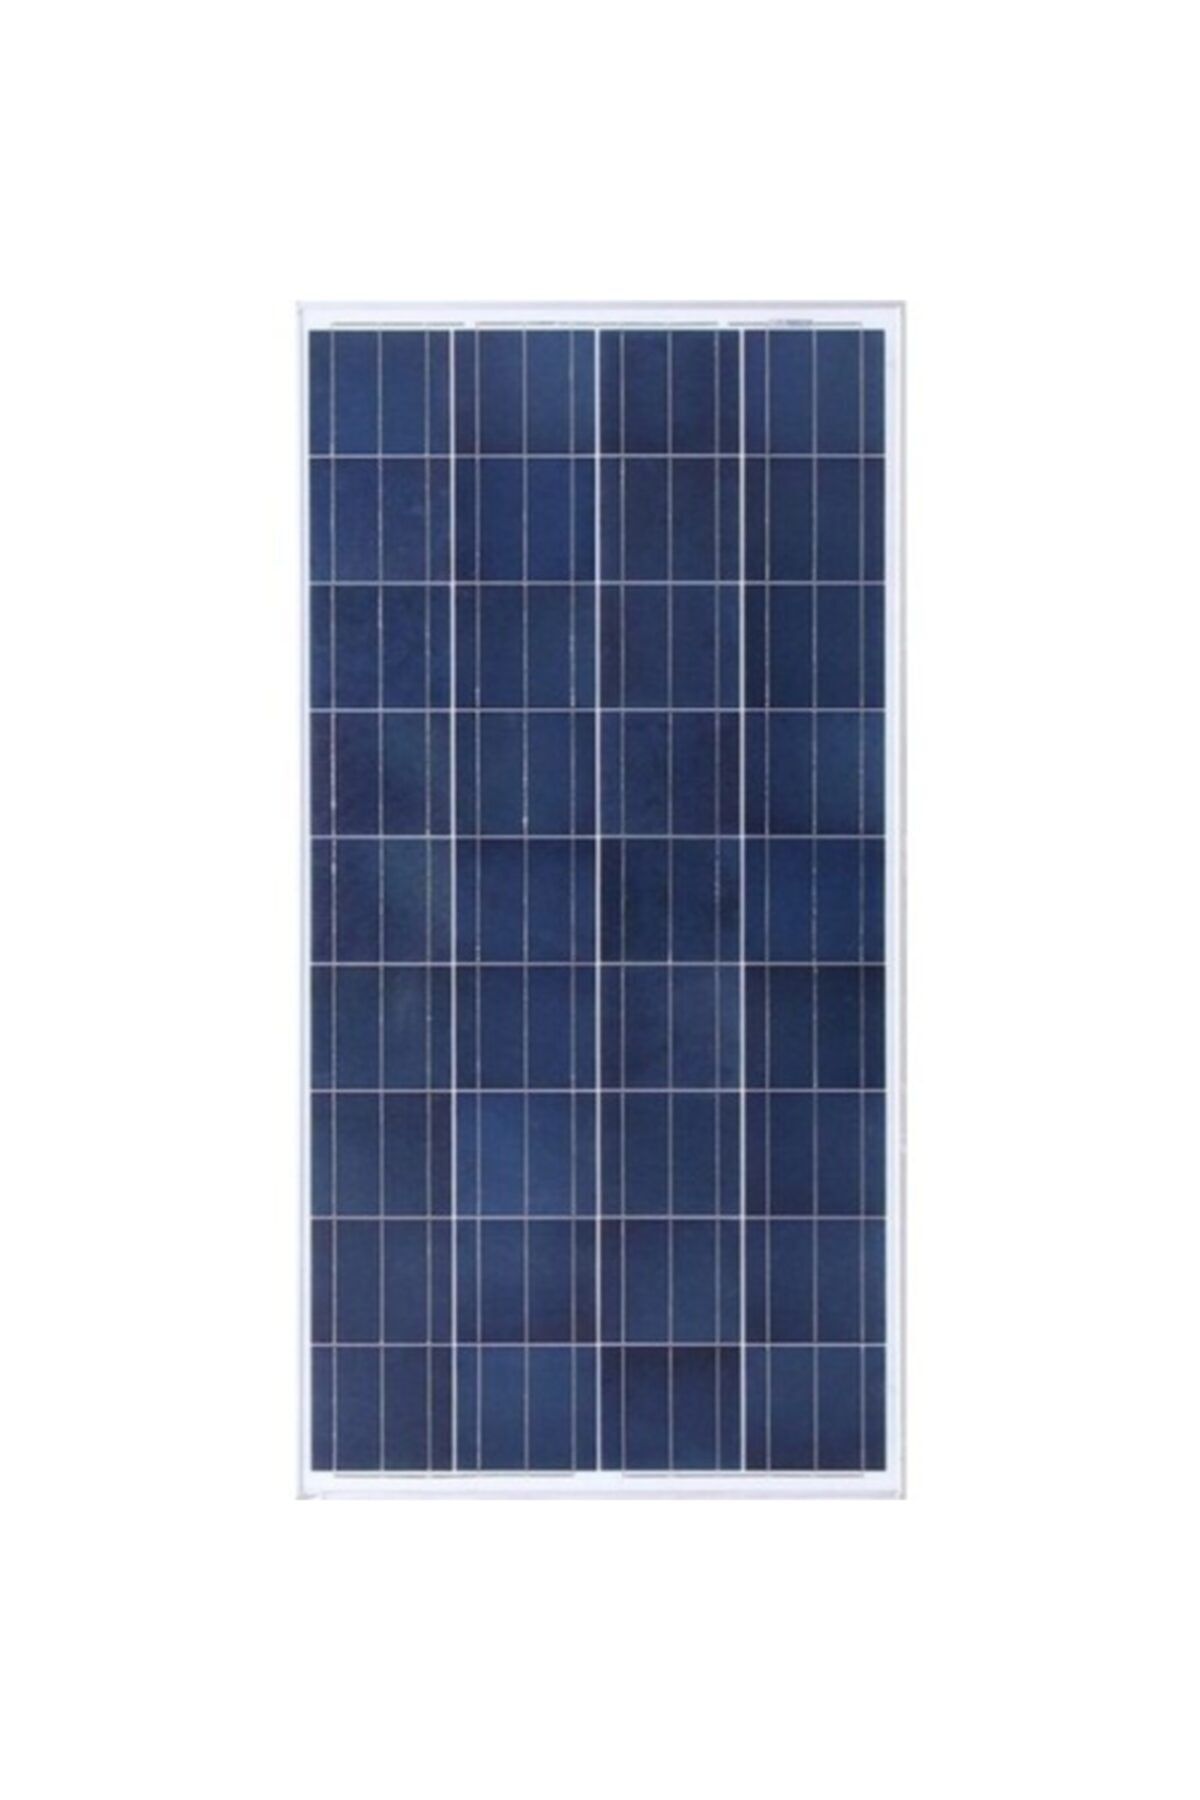 Pantec Solar Pantec 170 Watt W Polikristal Solar Güneş Paneli